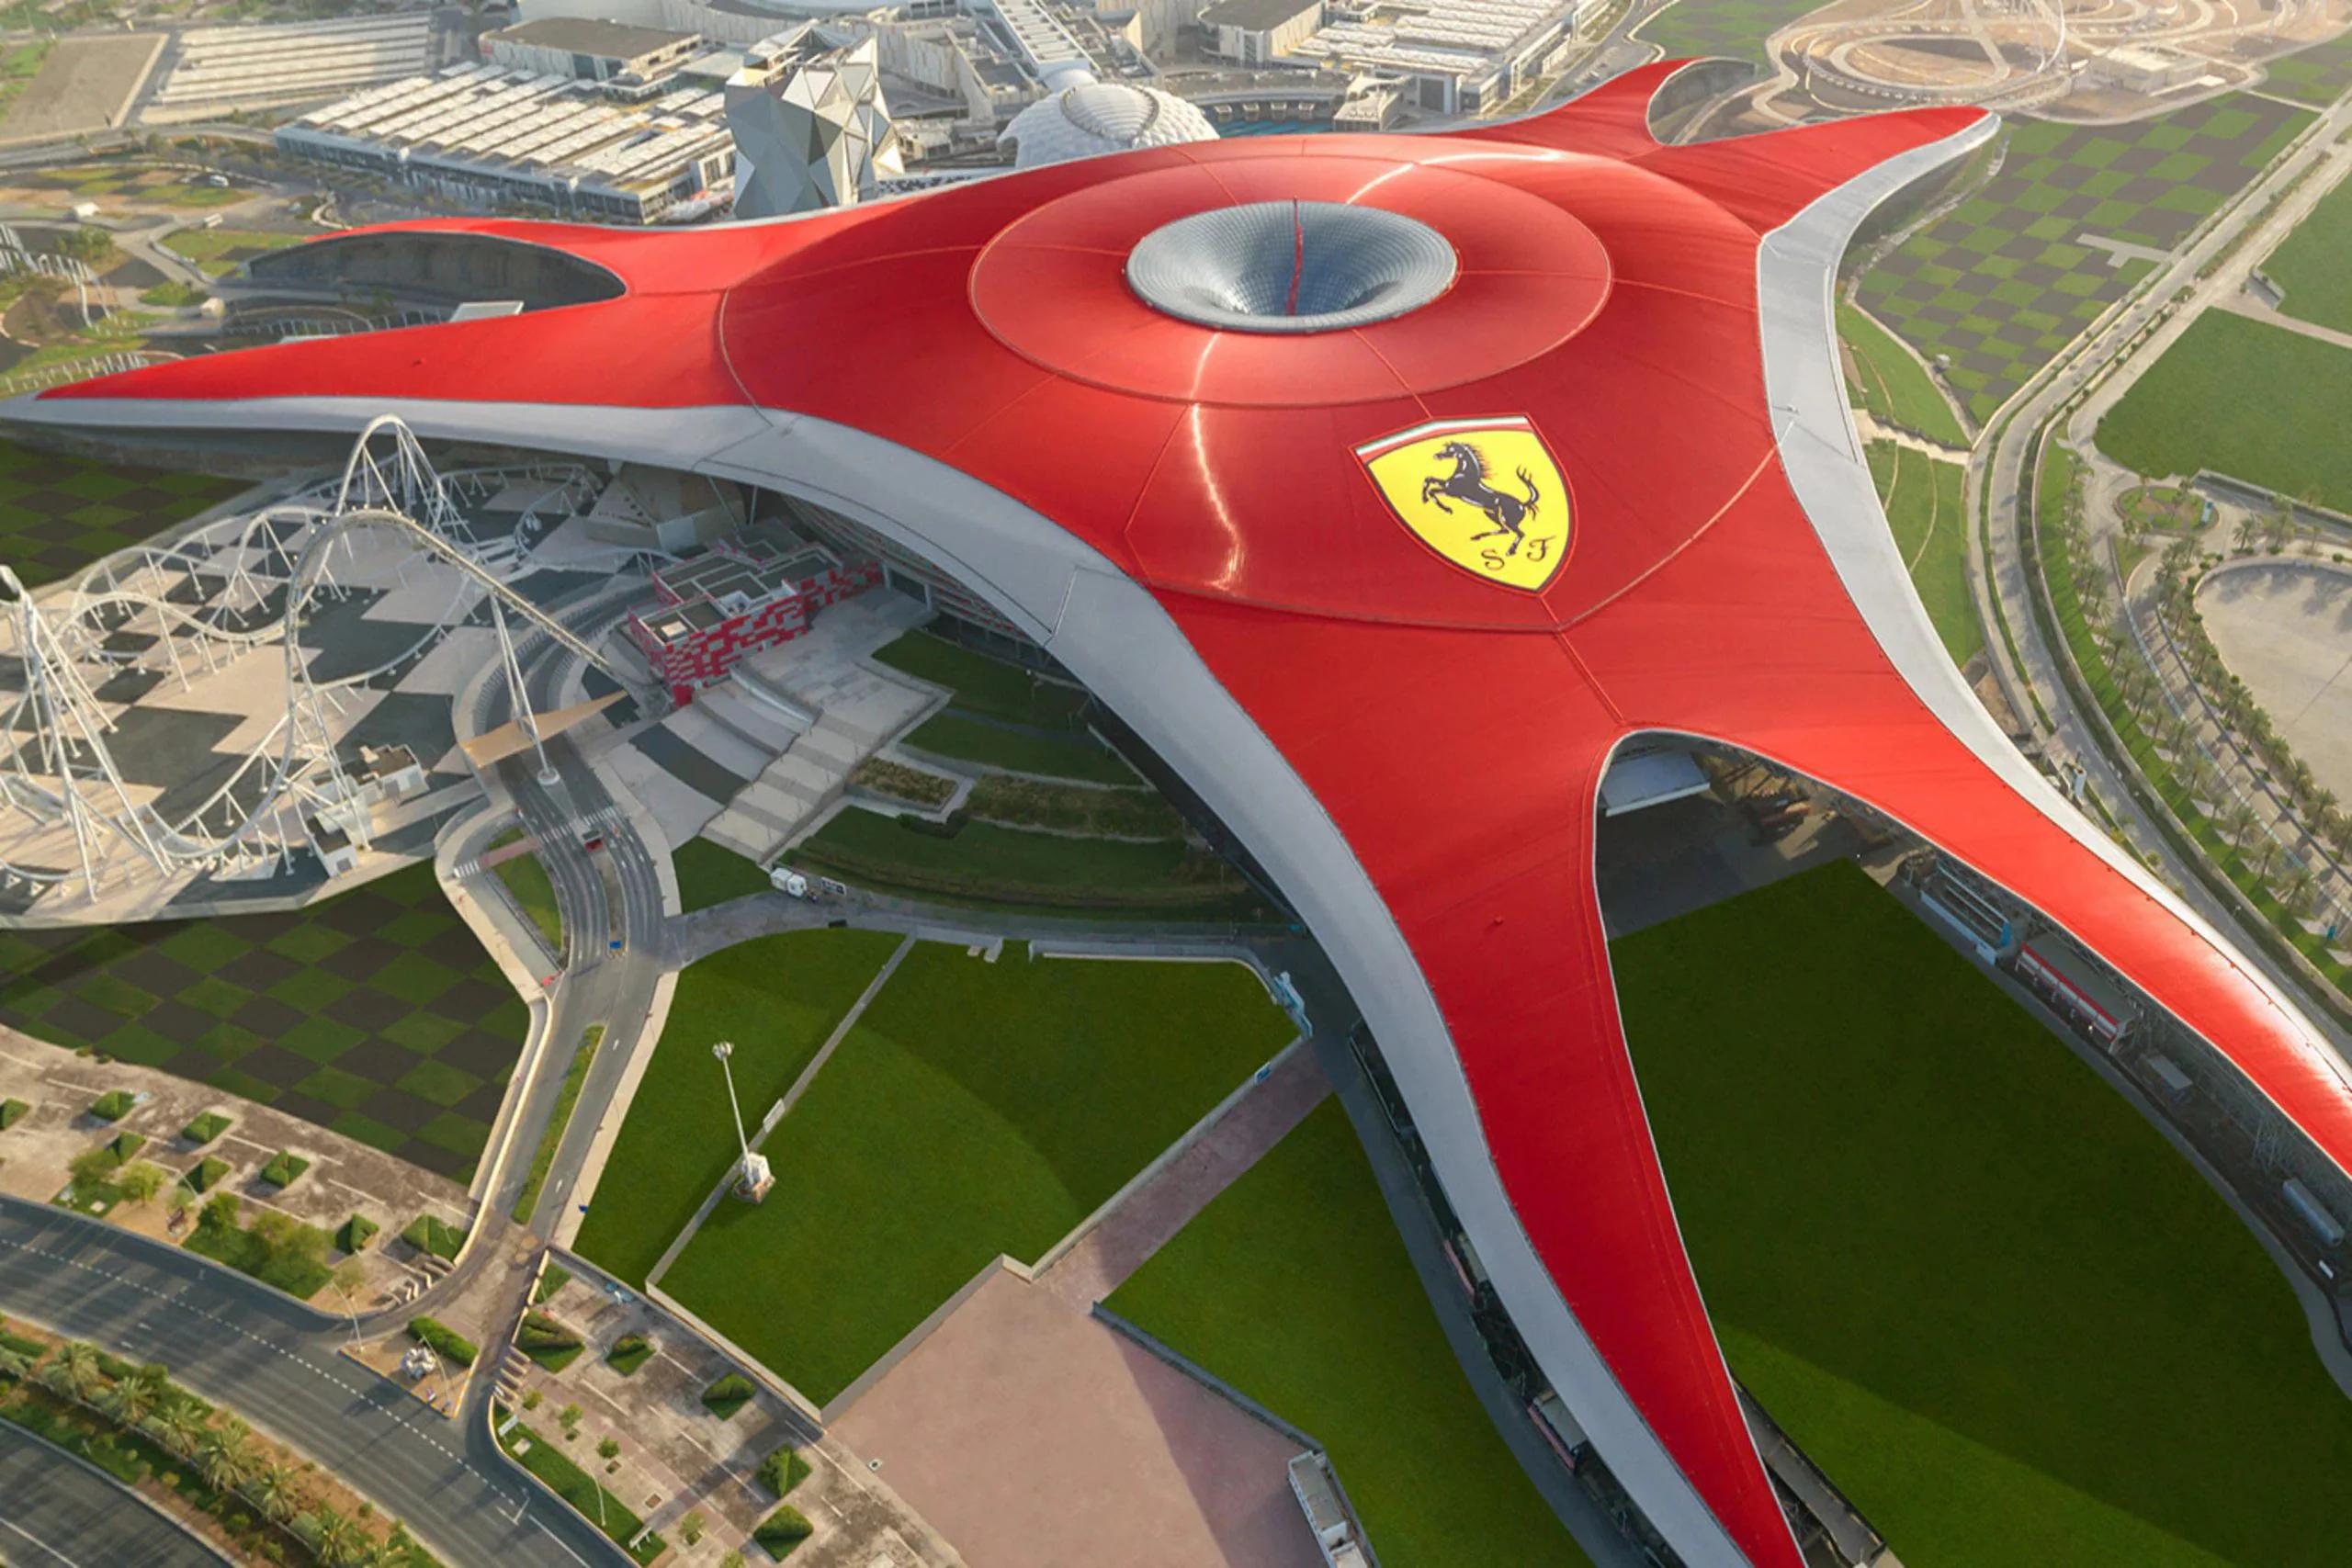 ferrari world ticket price - How much does it cost to build Ferrari World